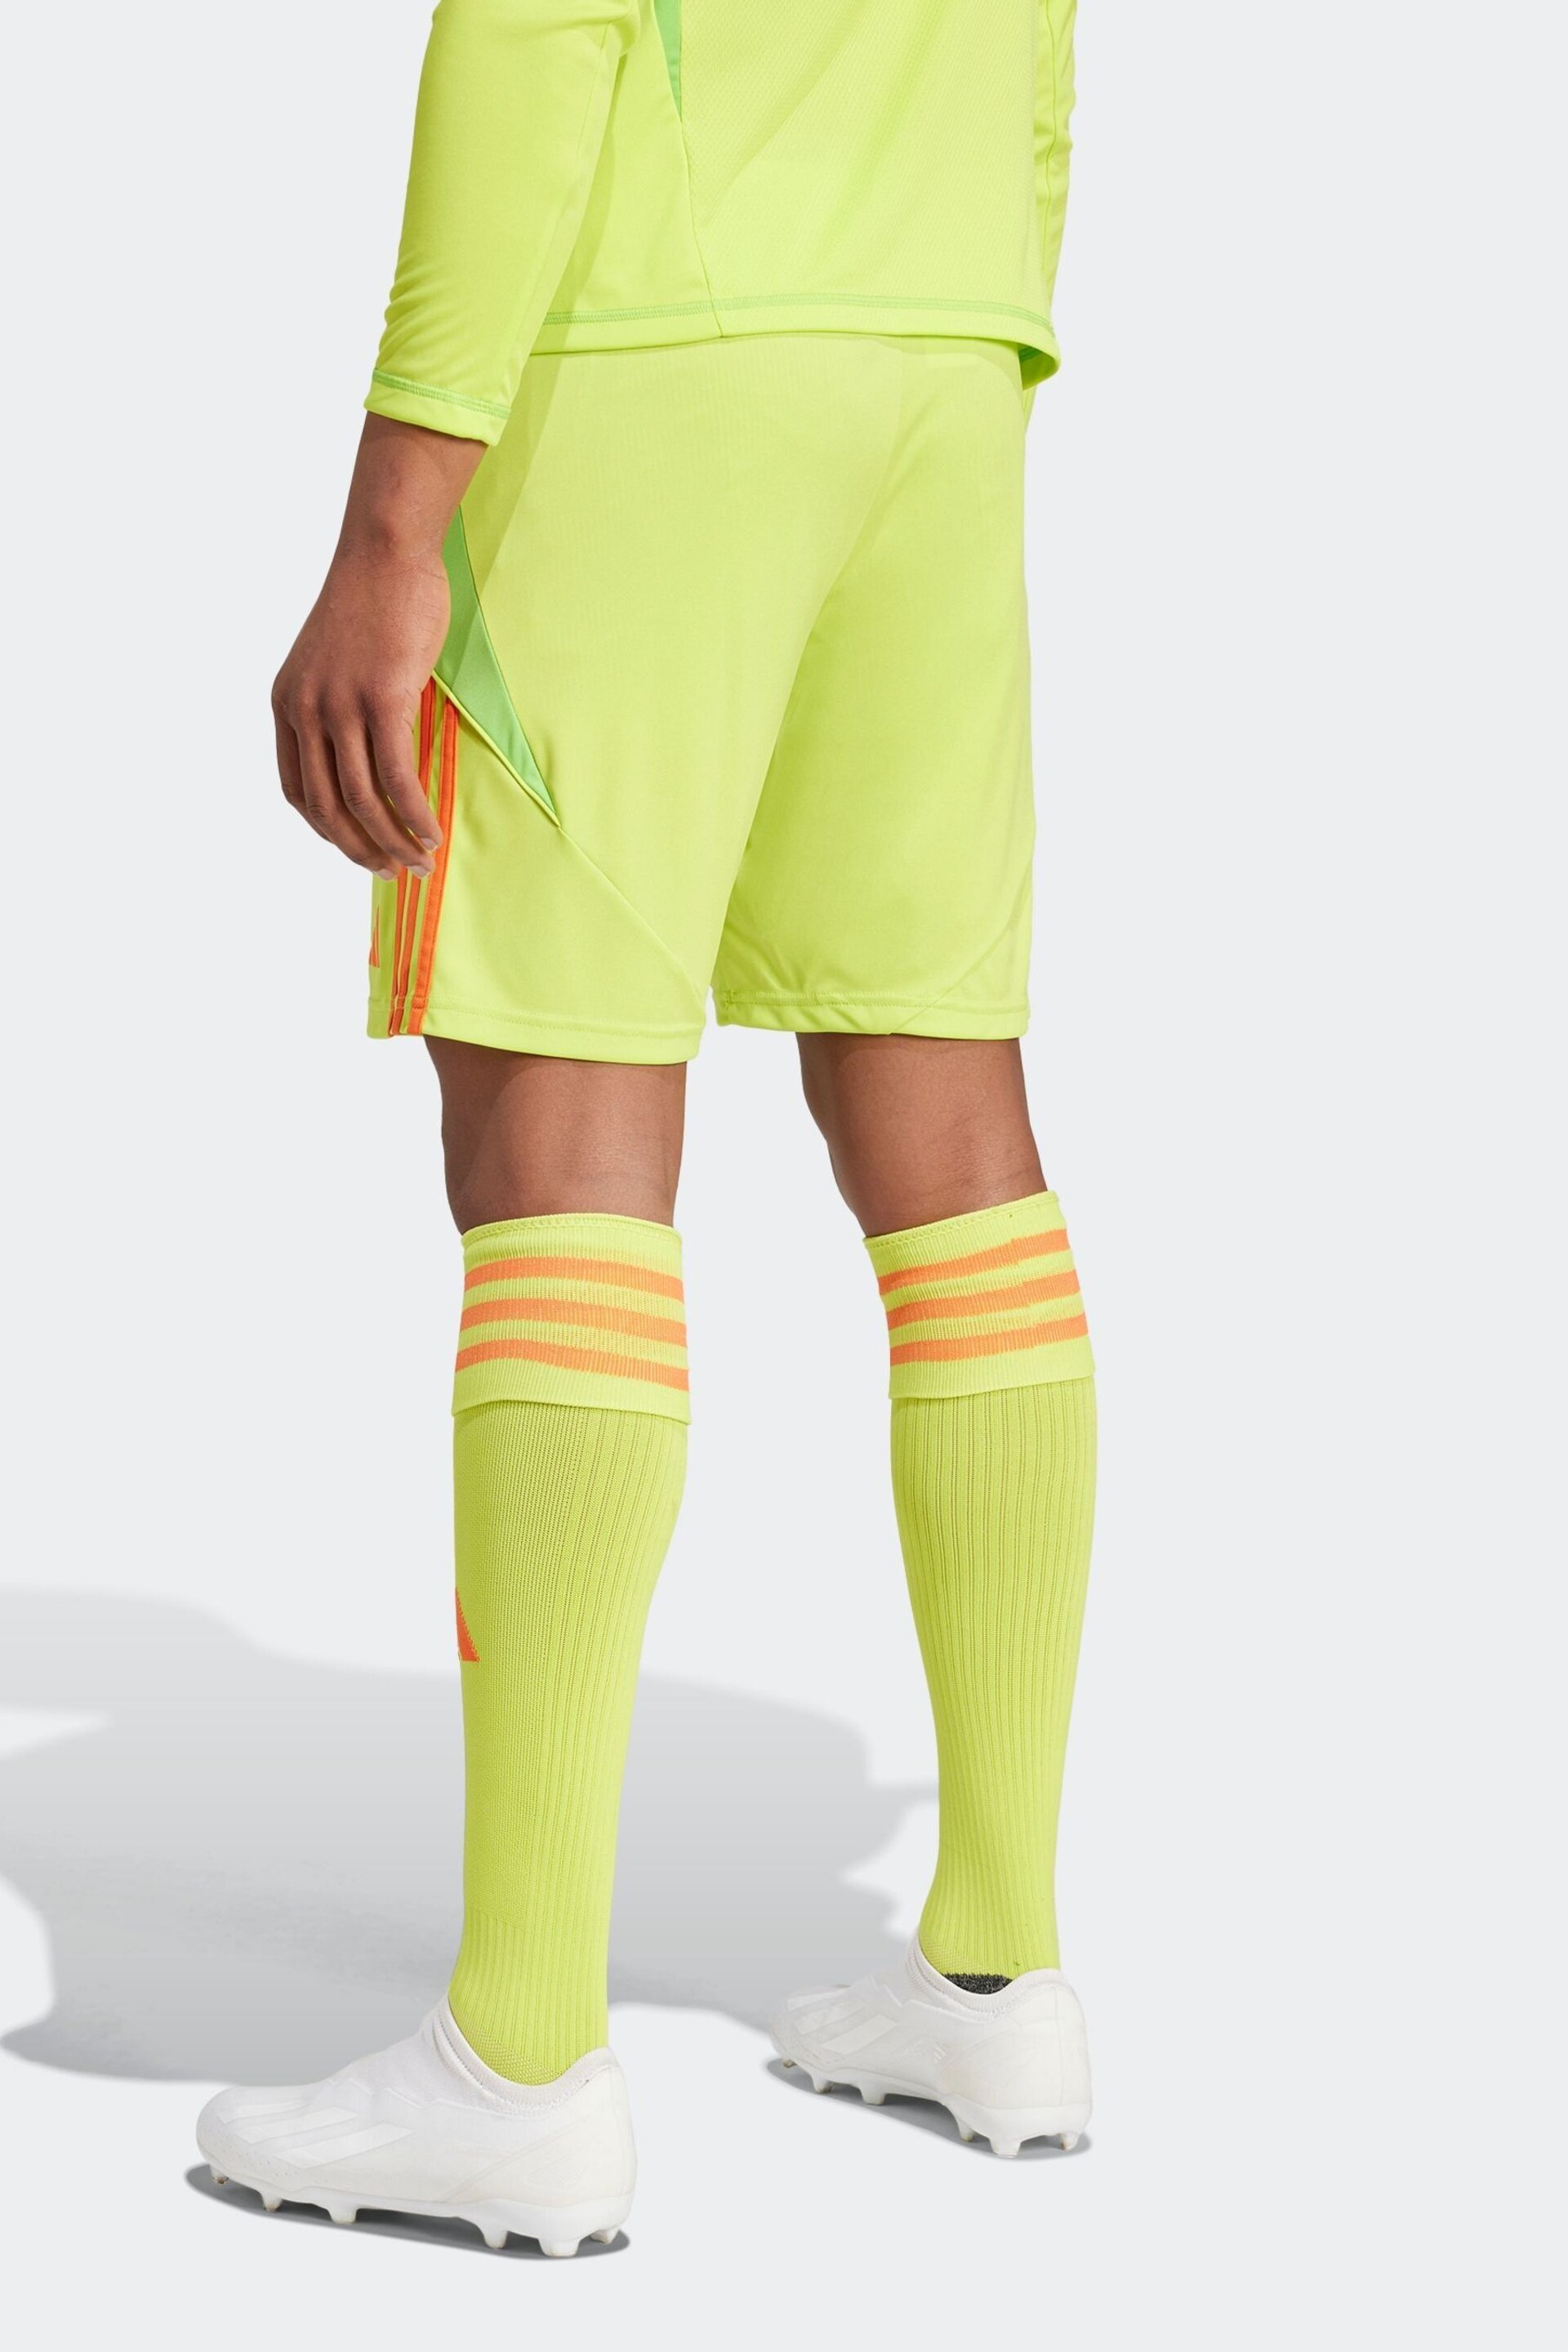 adidas Yellow Tiro 24 Shorts - Image 3 of 6